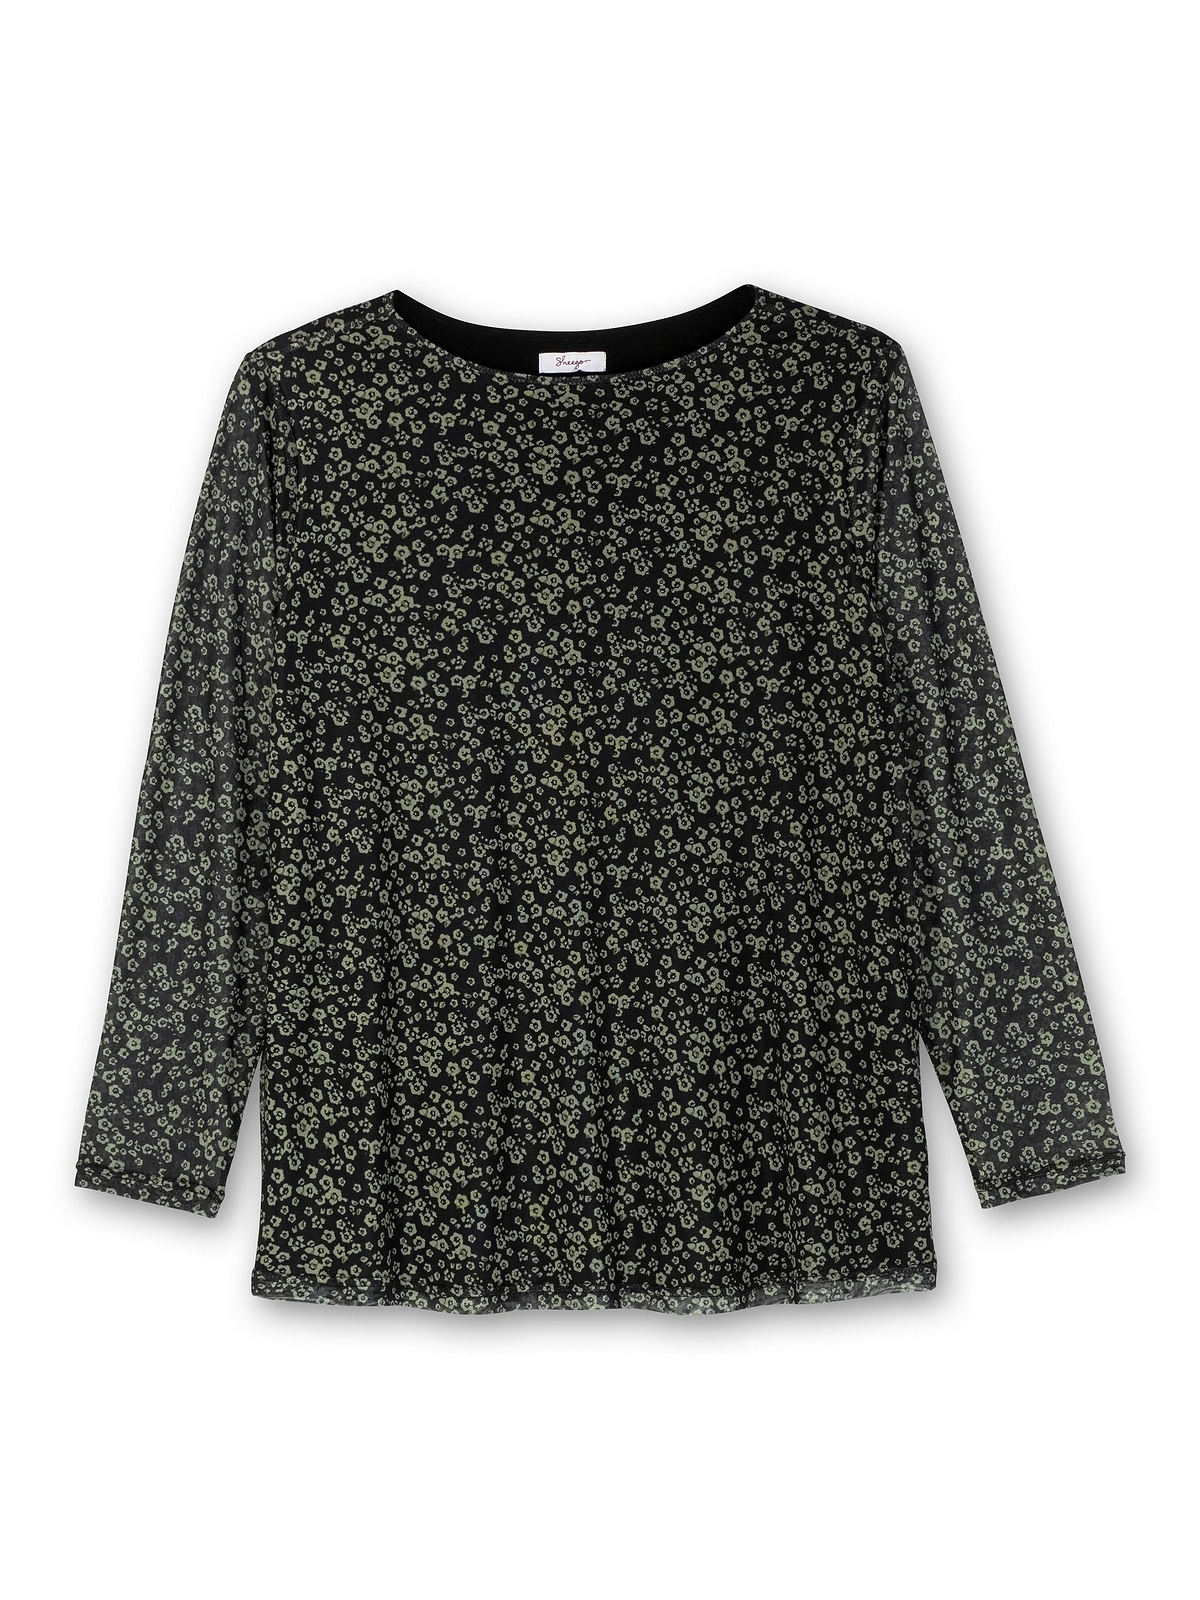 Sheego Langarmshirt »Große Größen«, aus Mesh, mit Blüten-Minimalprint